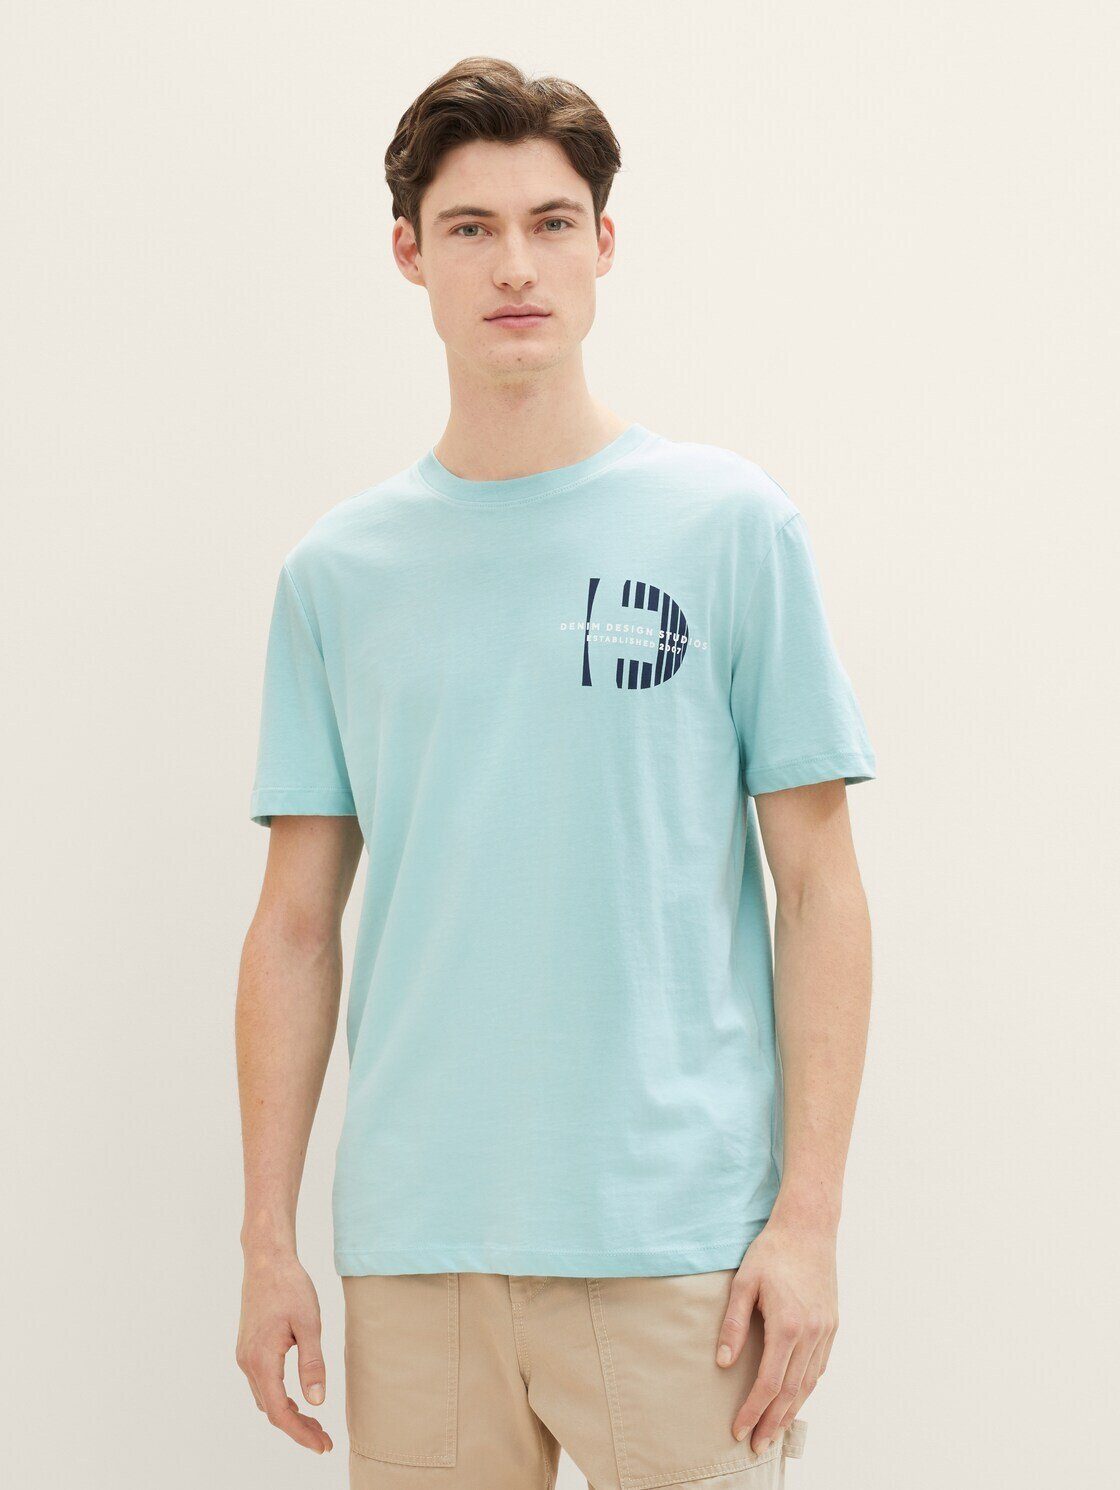 TOM TAILOR Denim T-Shirt T-Shirt mit Print pastel turquoise